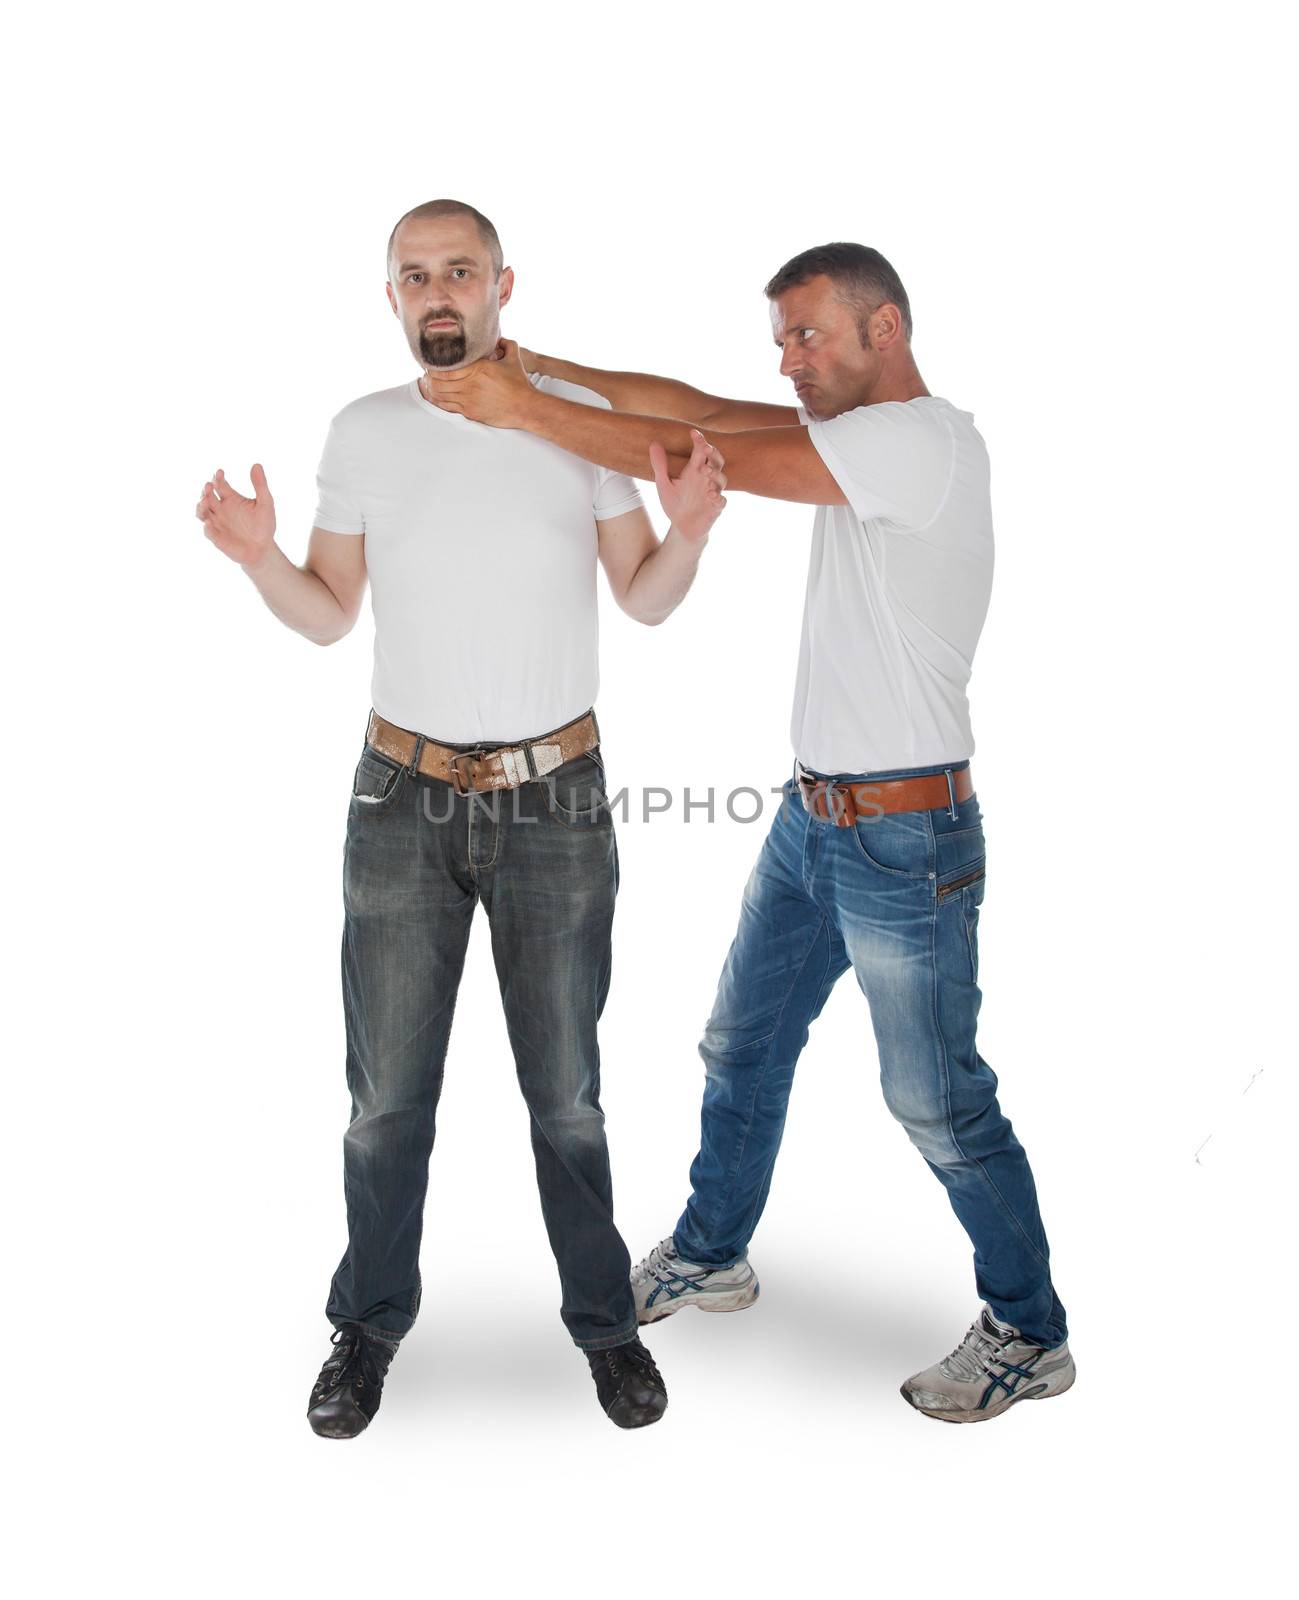 Man choking other man by michaklootwijk